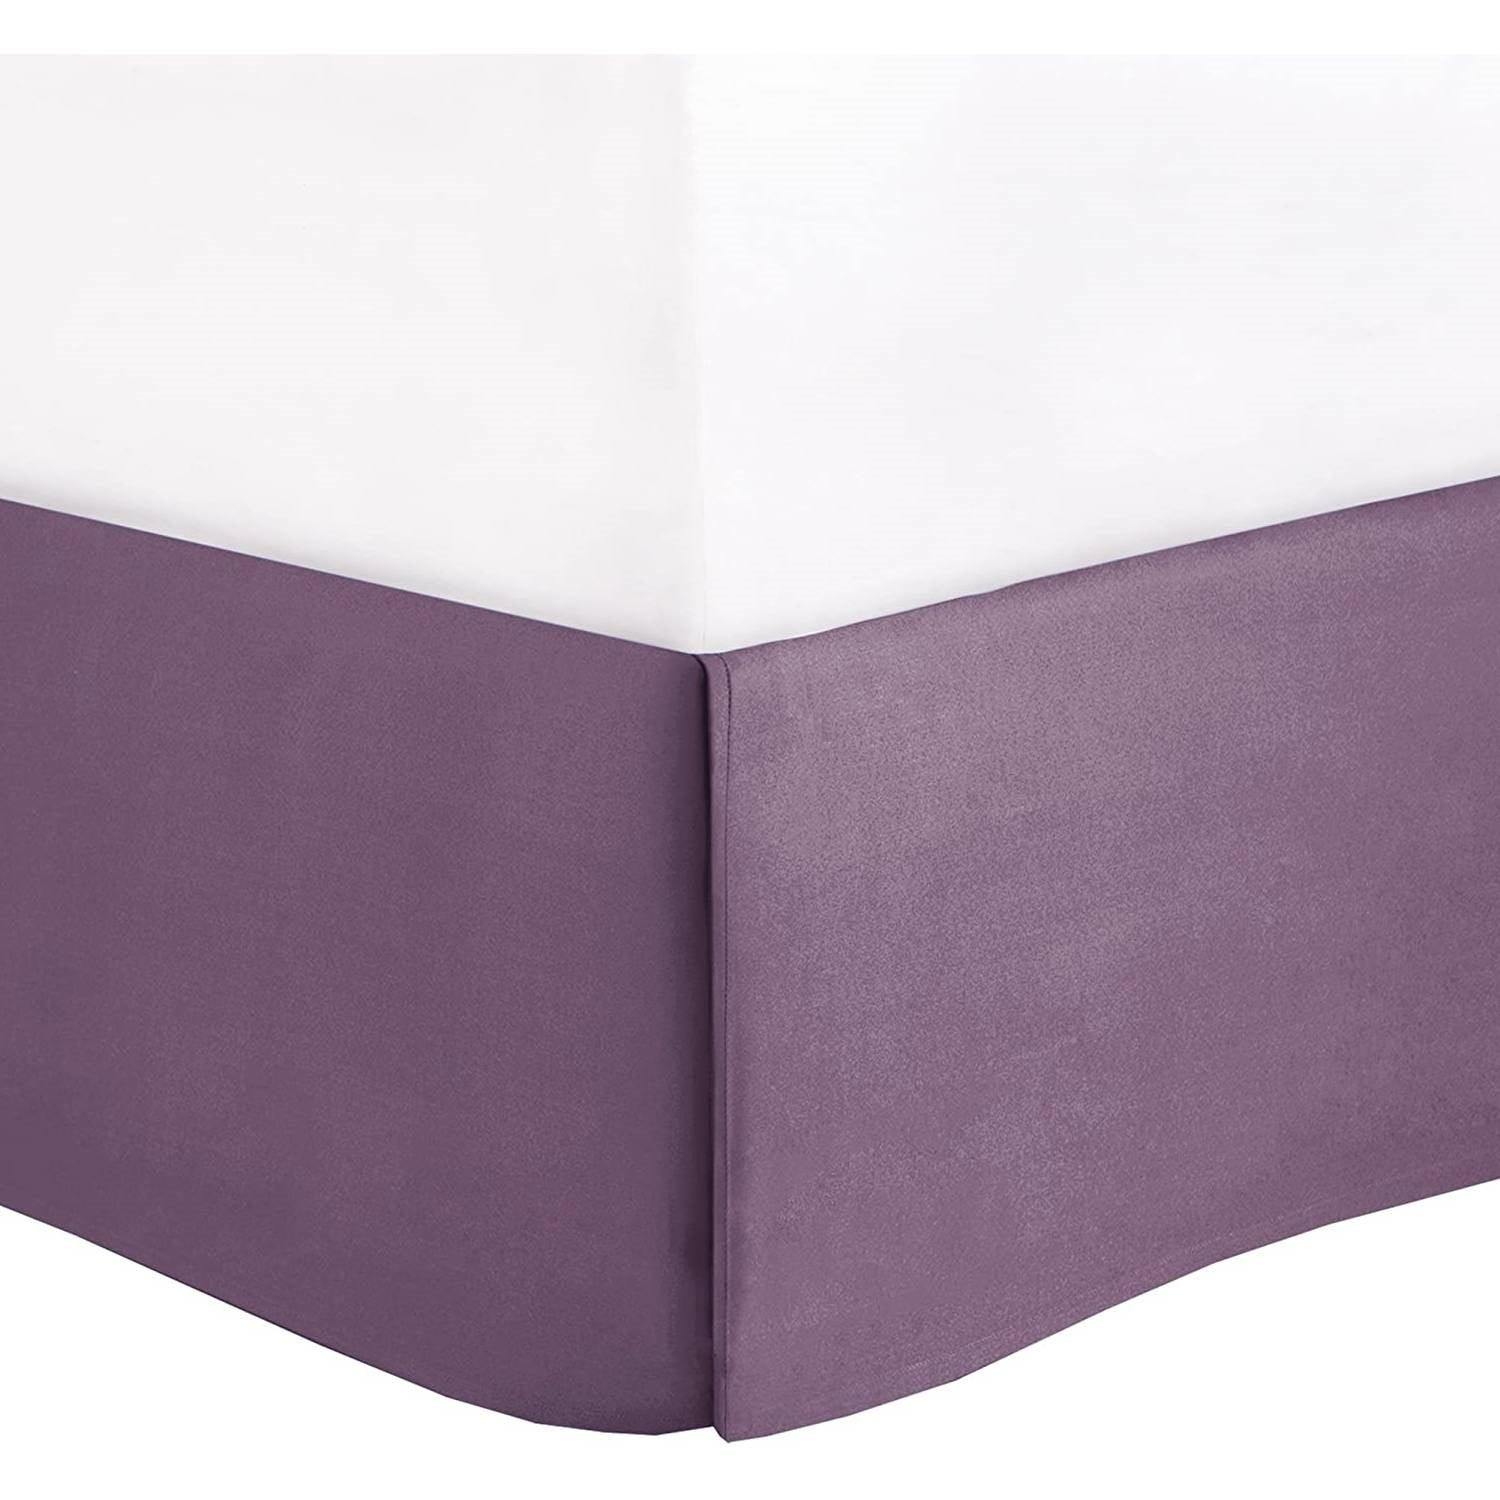 Queen Size 7 Piece Bed In A Bag Comforter Set Faux Silk Purple Gray Stripes - beddingbag.com